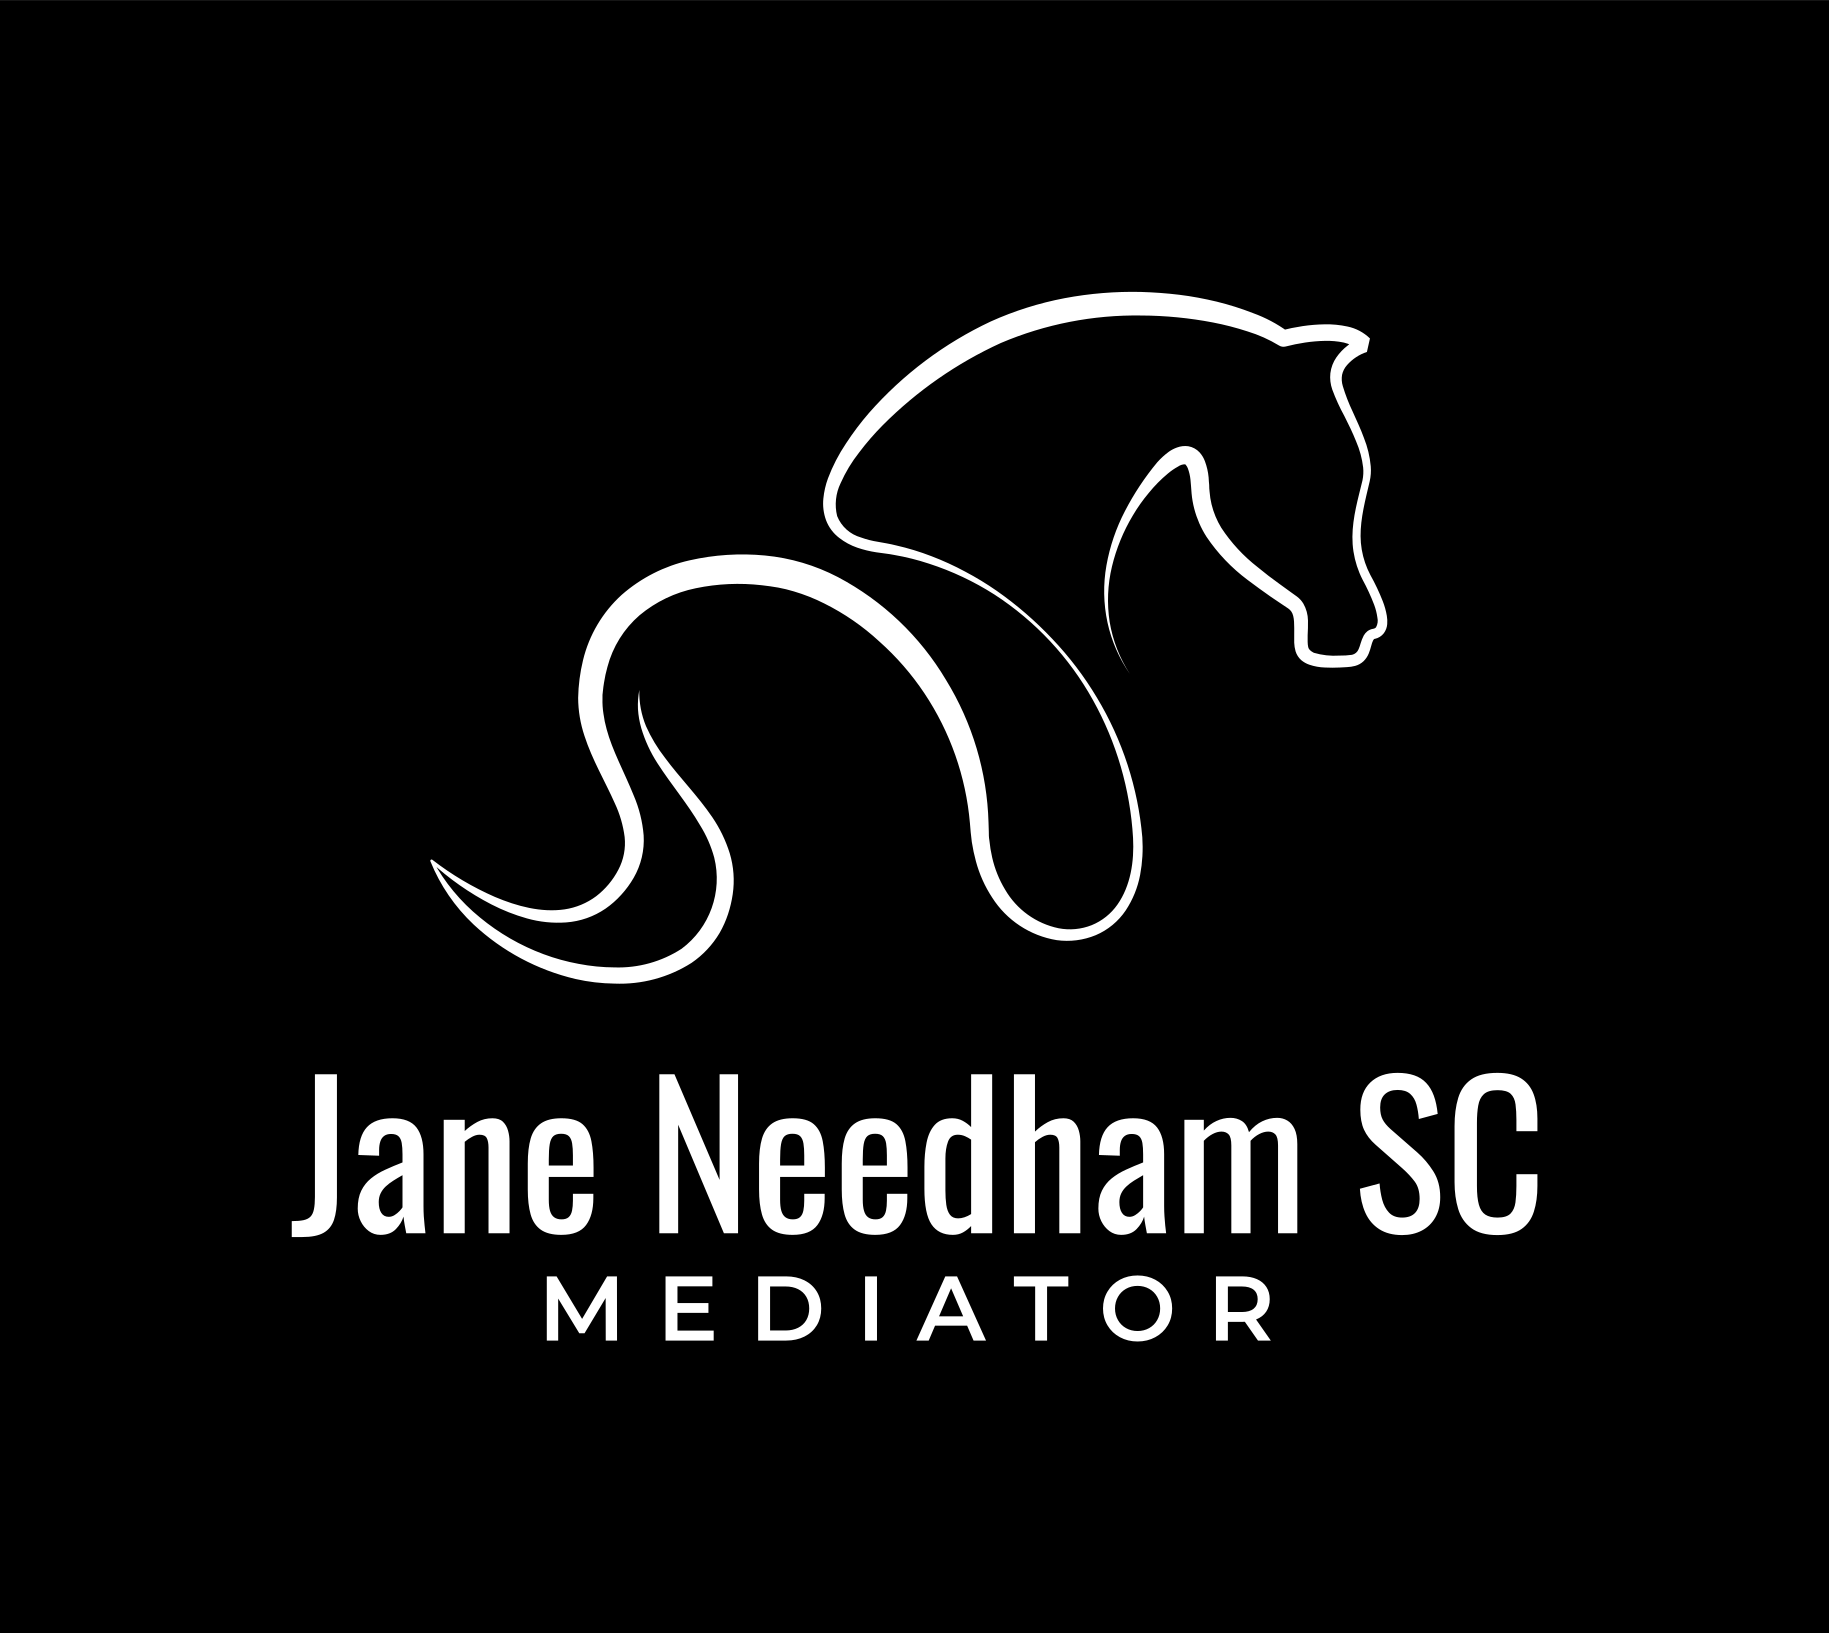 Jane Needham SC – dispute resolution